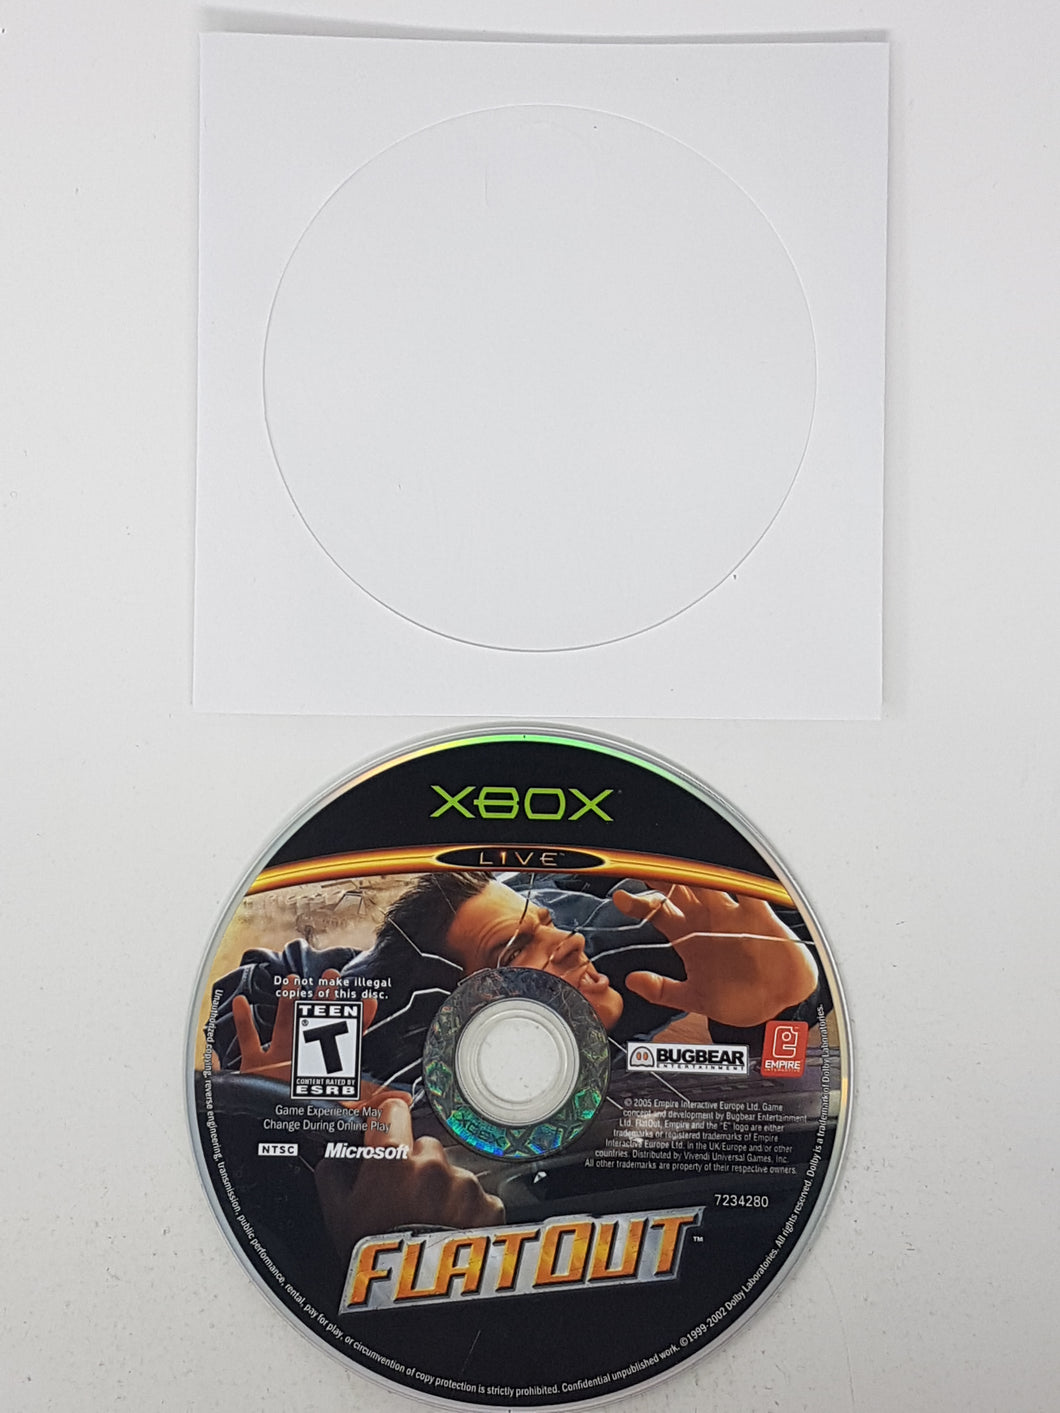 Flatout - Microsoft Xbox